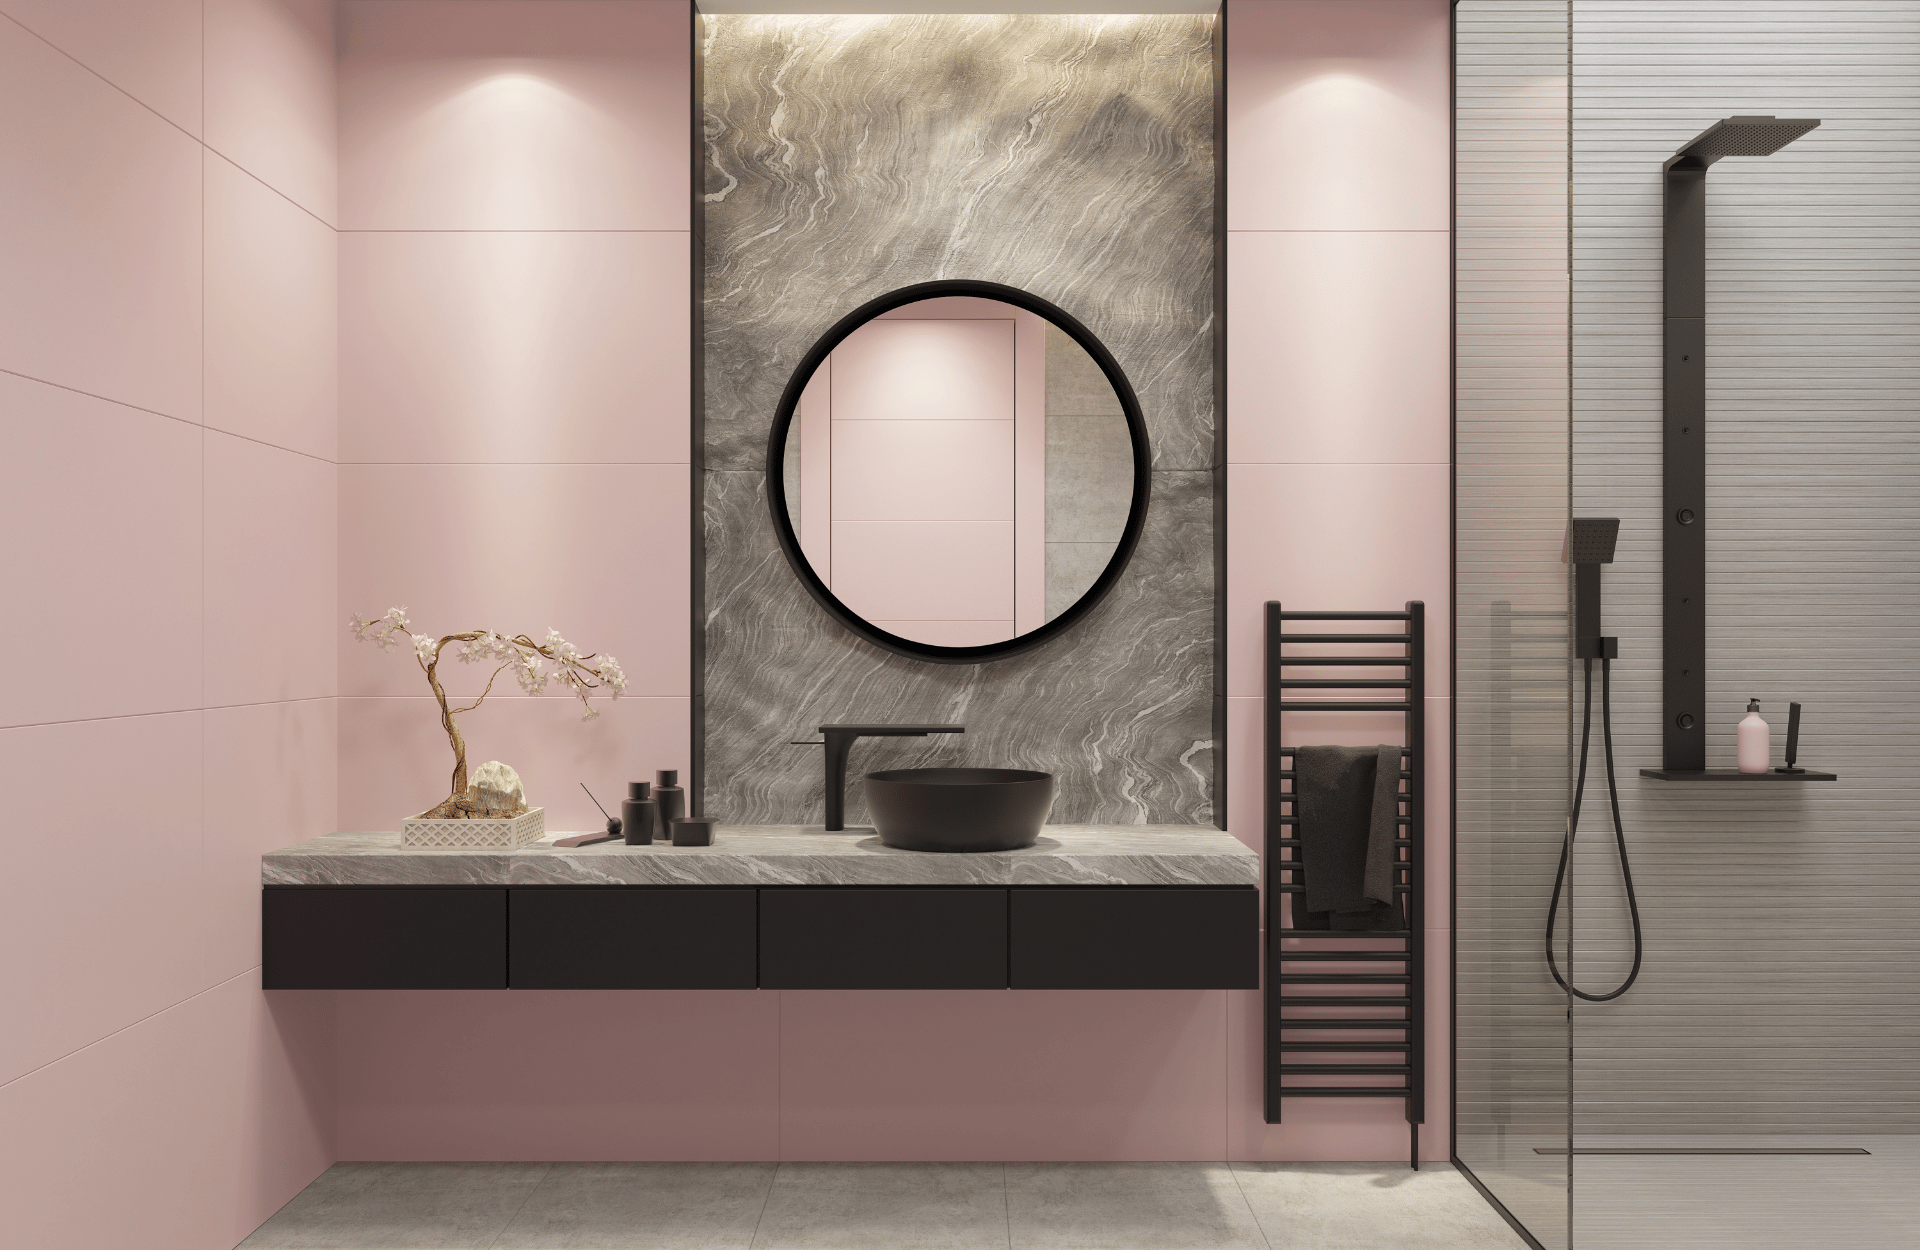 Pink and black bathroom ideas